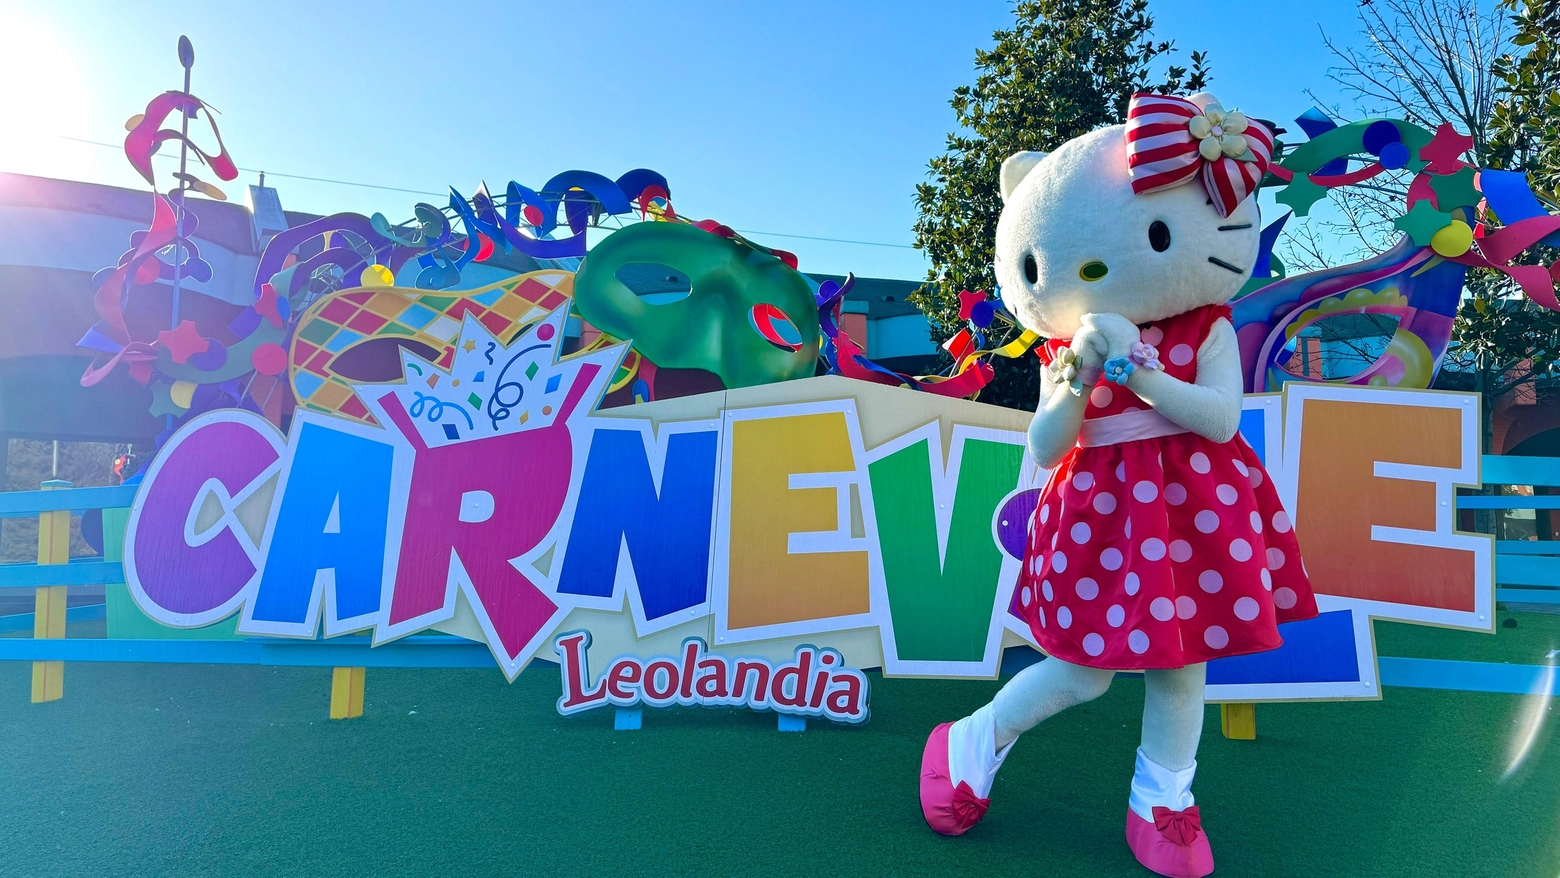 Leolandia, Carnevale con Hello Kitty